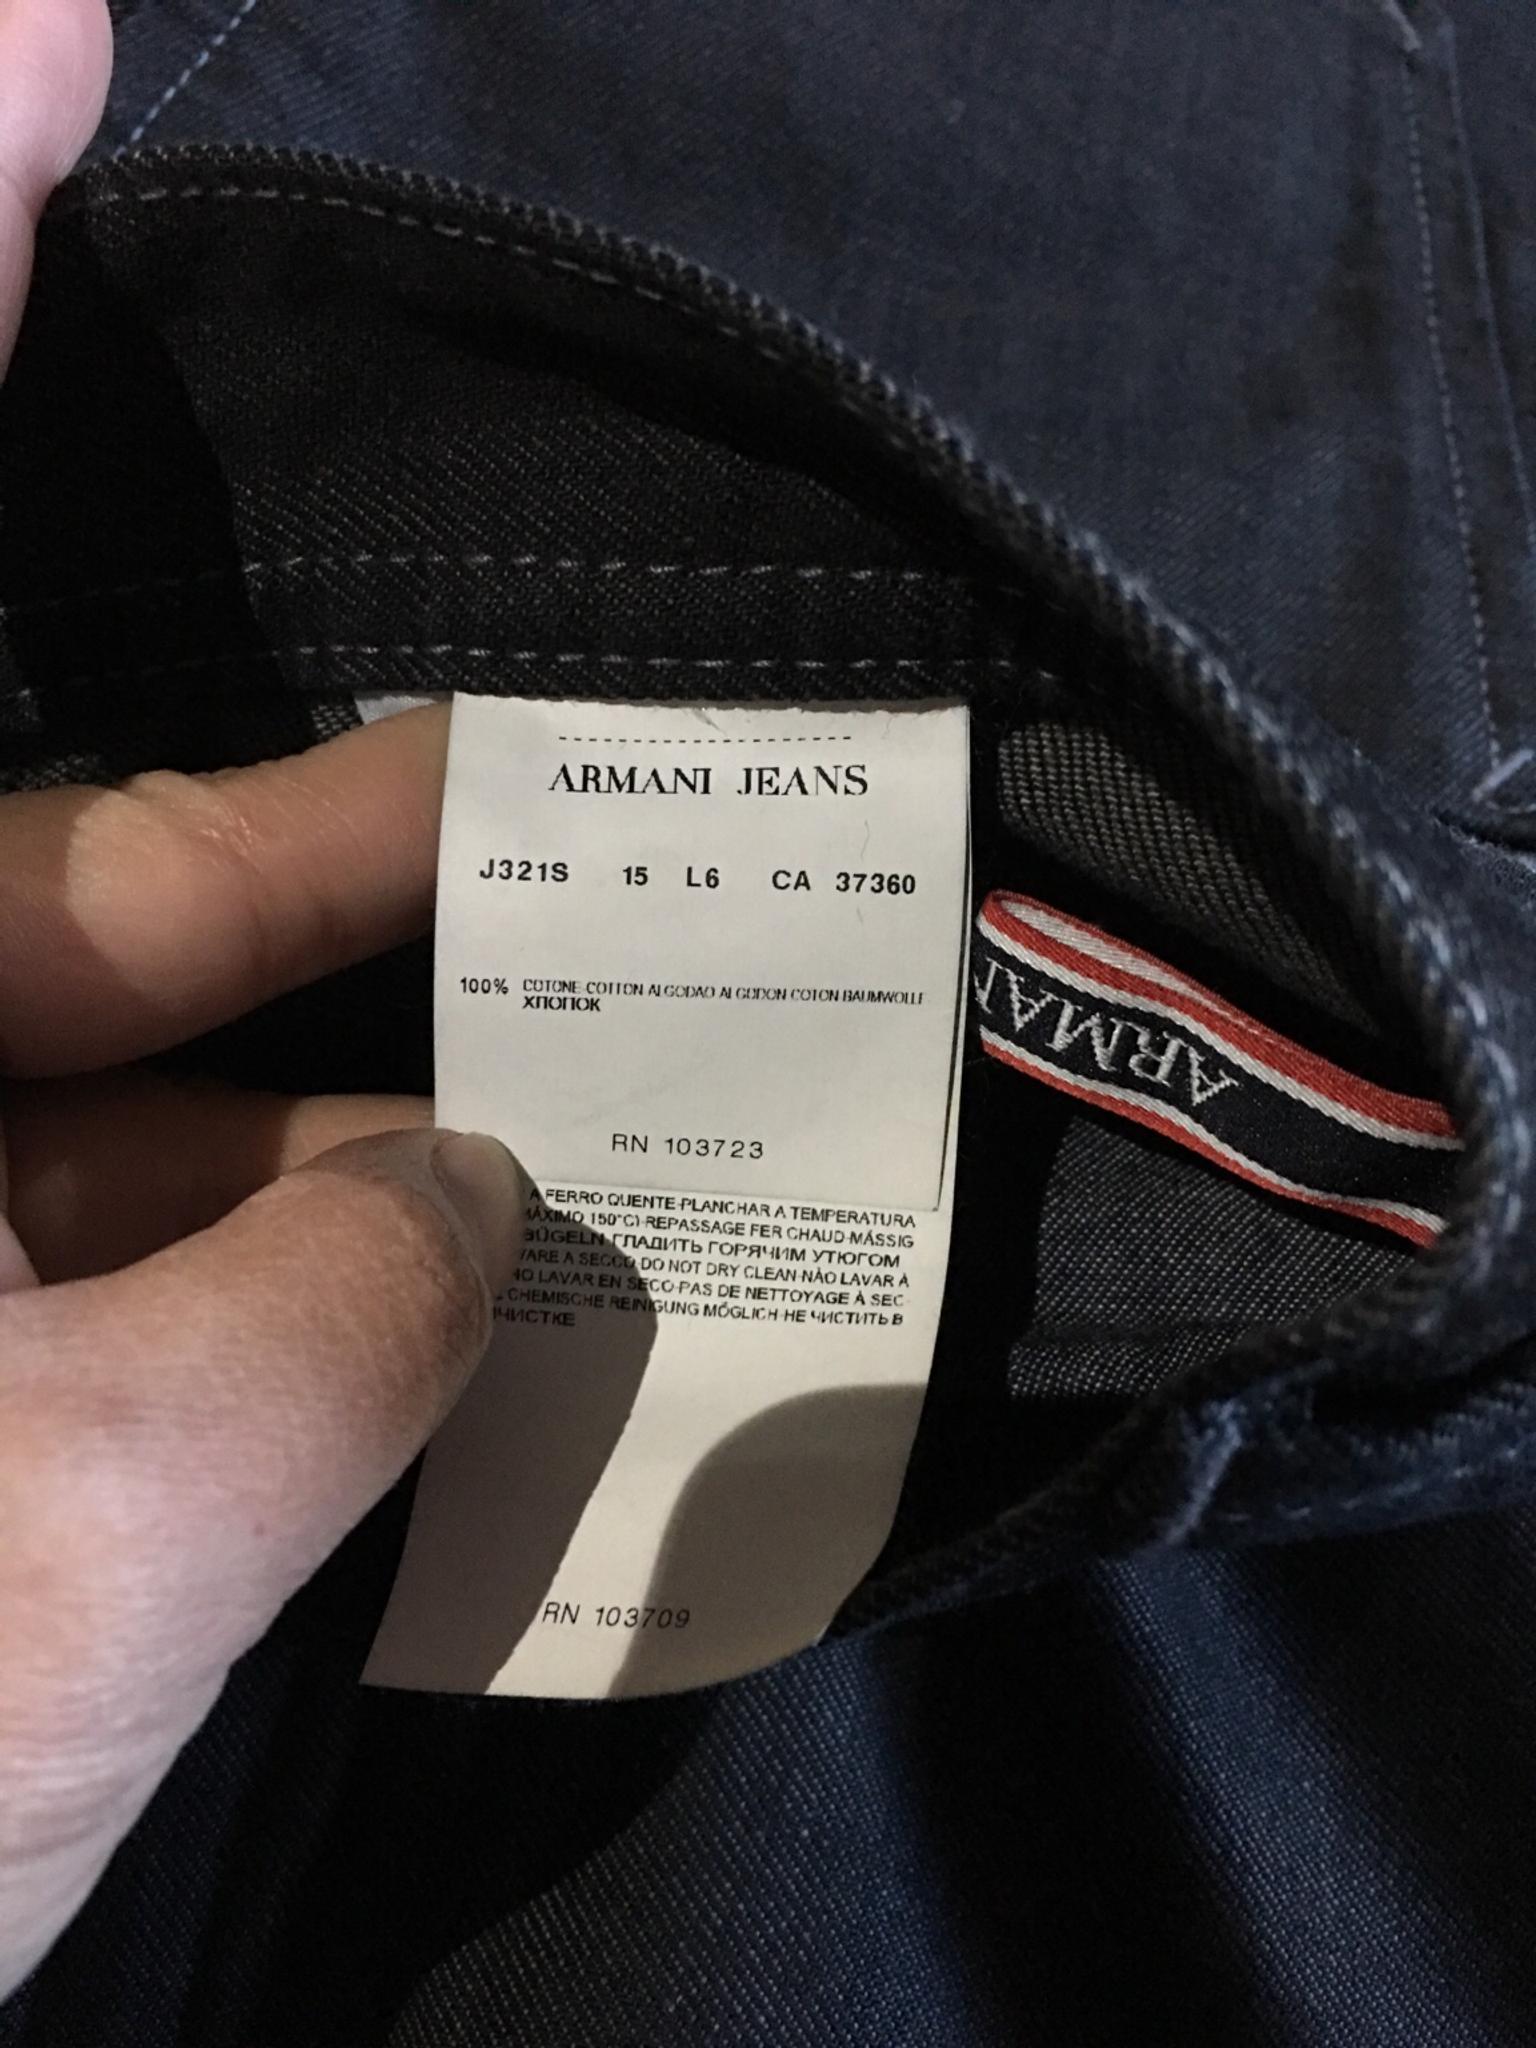 armani jeans ca 37360 - 54% OFF 